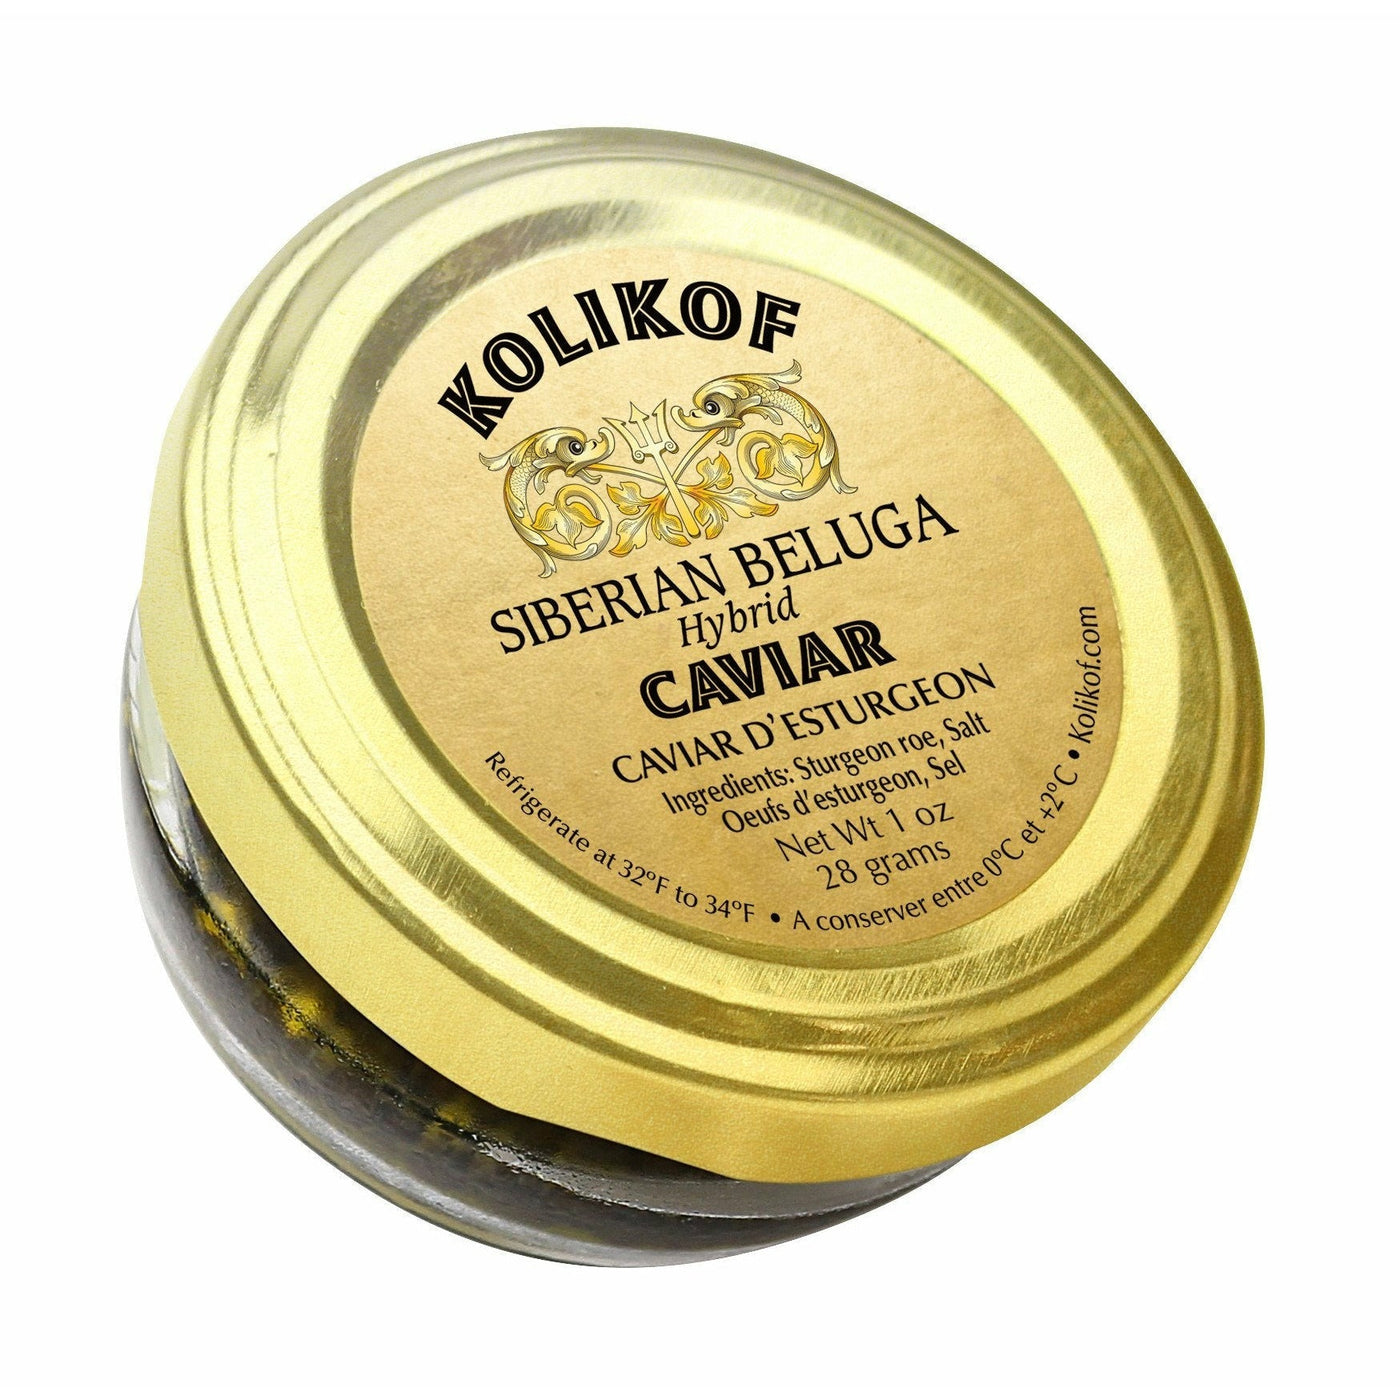 Siberian Beluga Hybrid Caviar